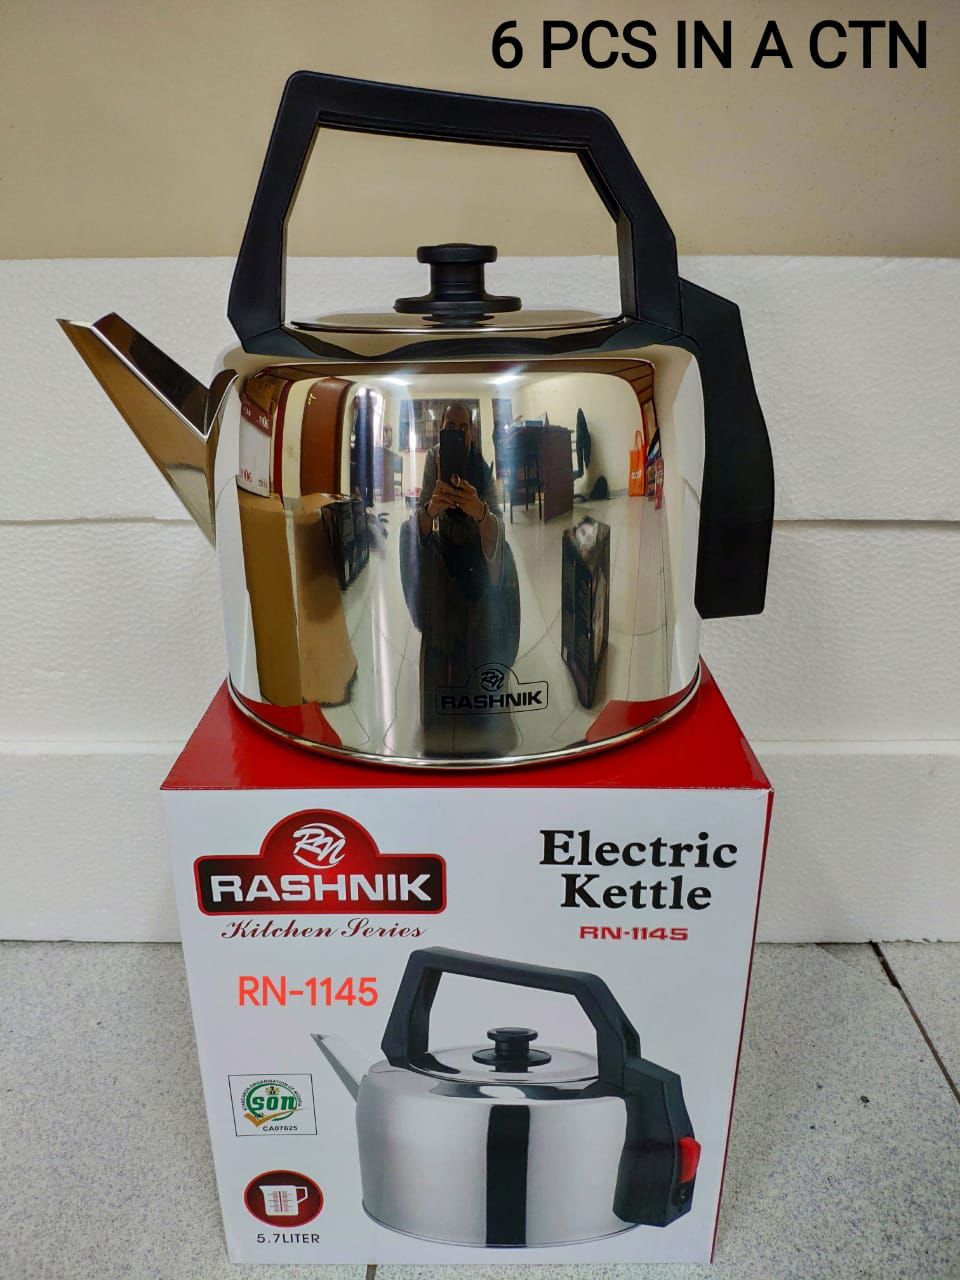 Rashnik Electric kettle 5.7litres